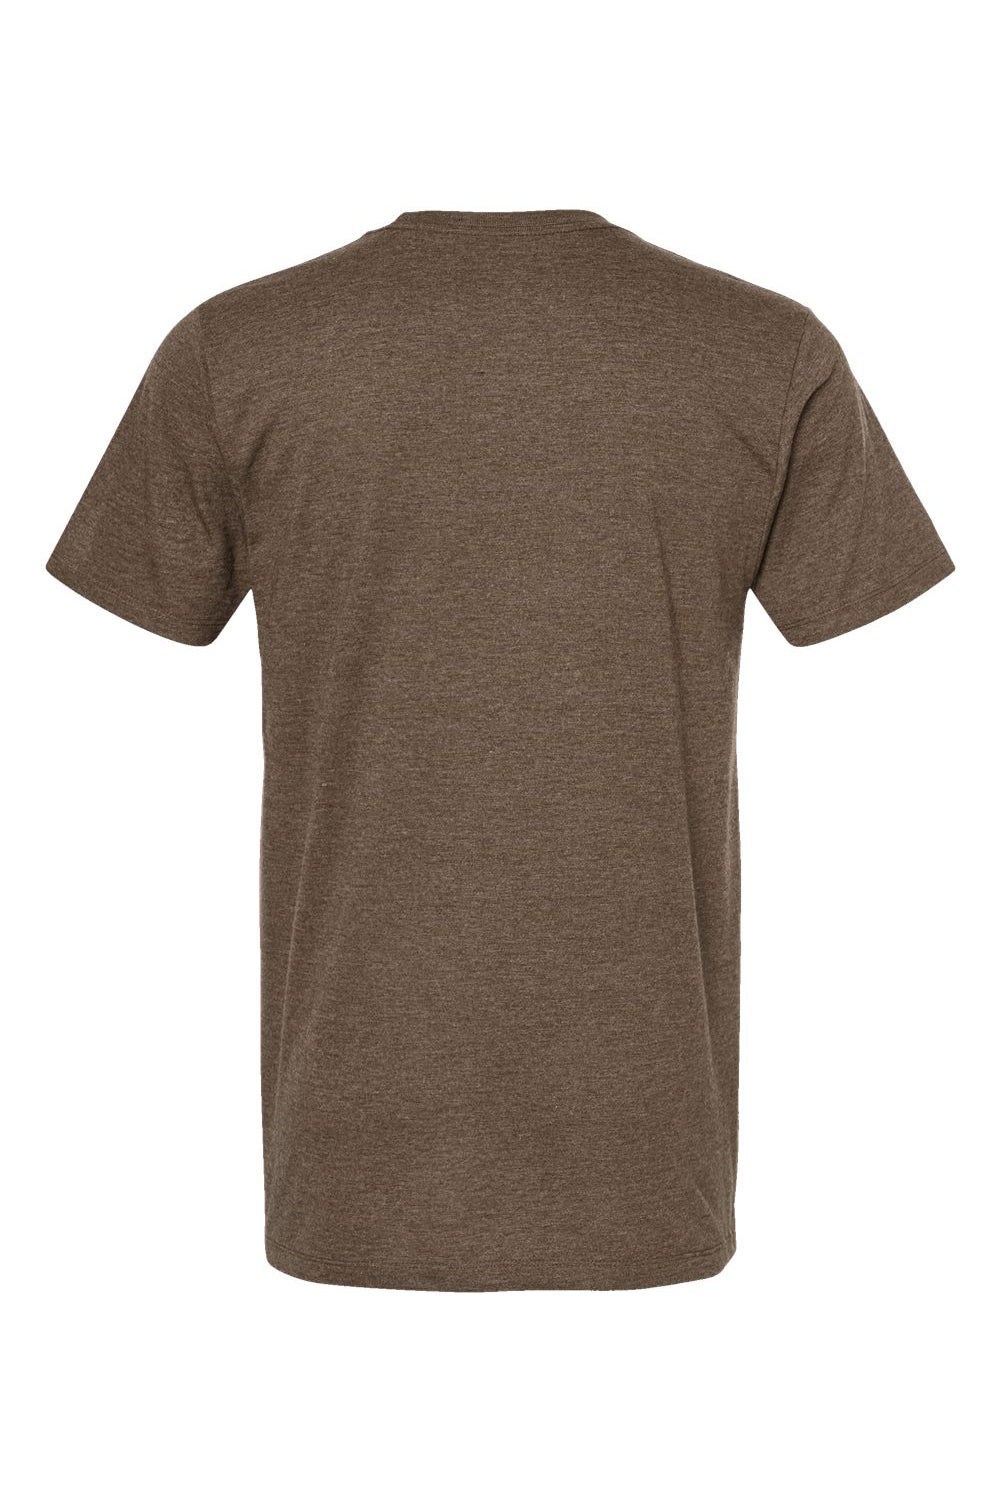 Tultex 541 Mens Premium Short Sleeve Crewneck T-Shirt Heather Brown Flat Back